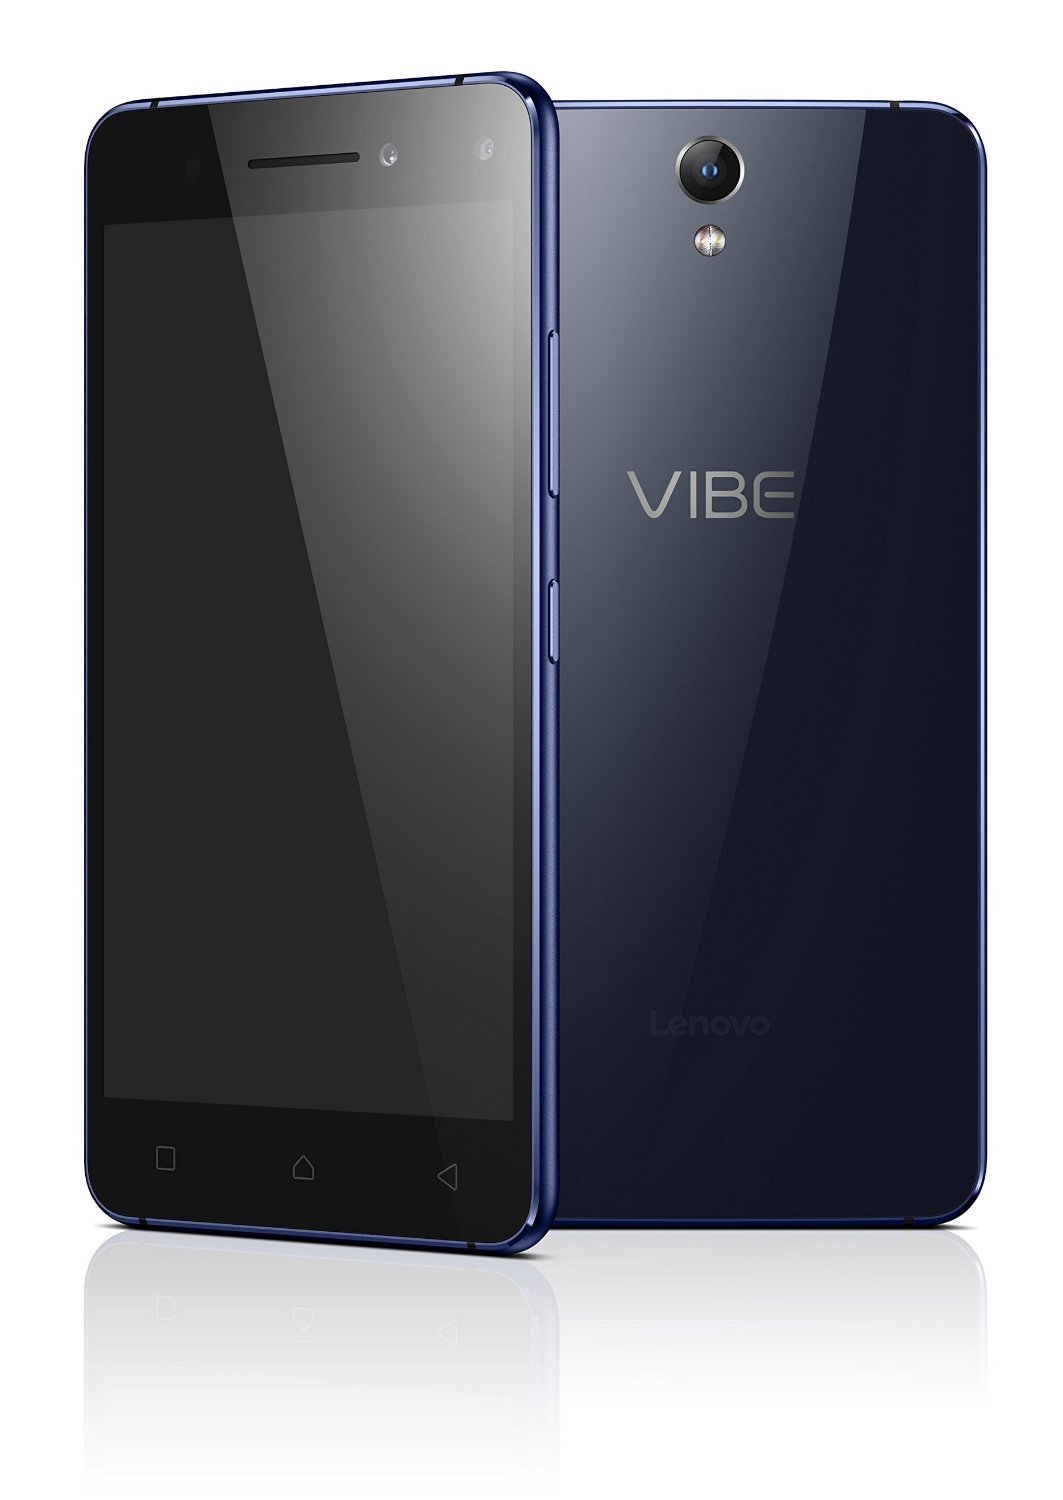 amazon-india-lenovo-vibe-s1-smartphone-3gb-ram-front-back-side-view